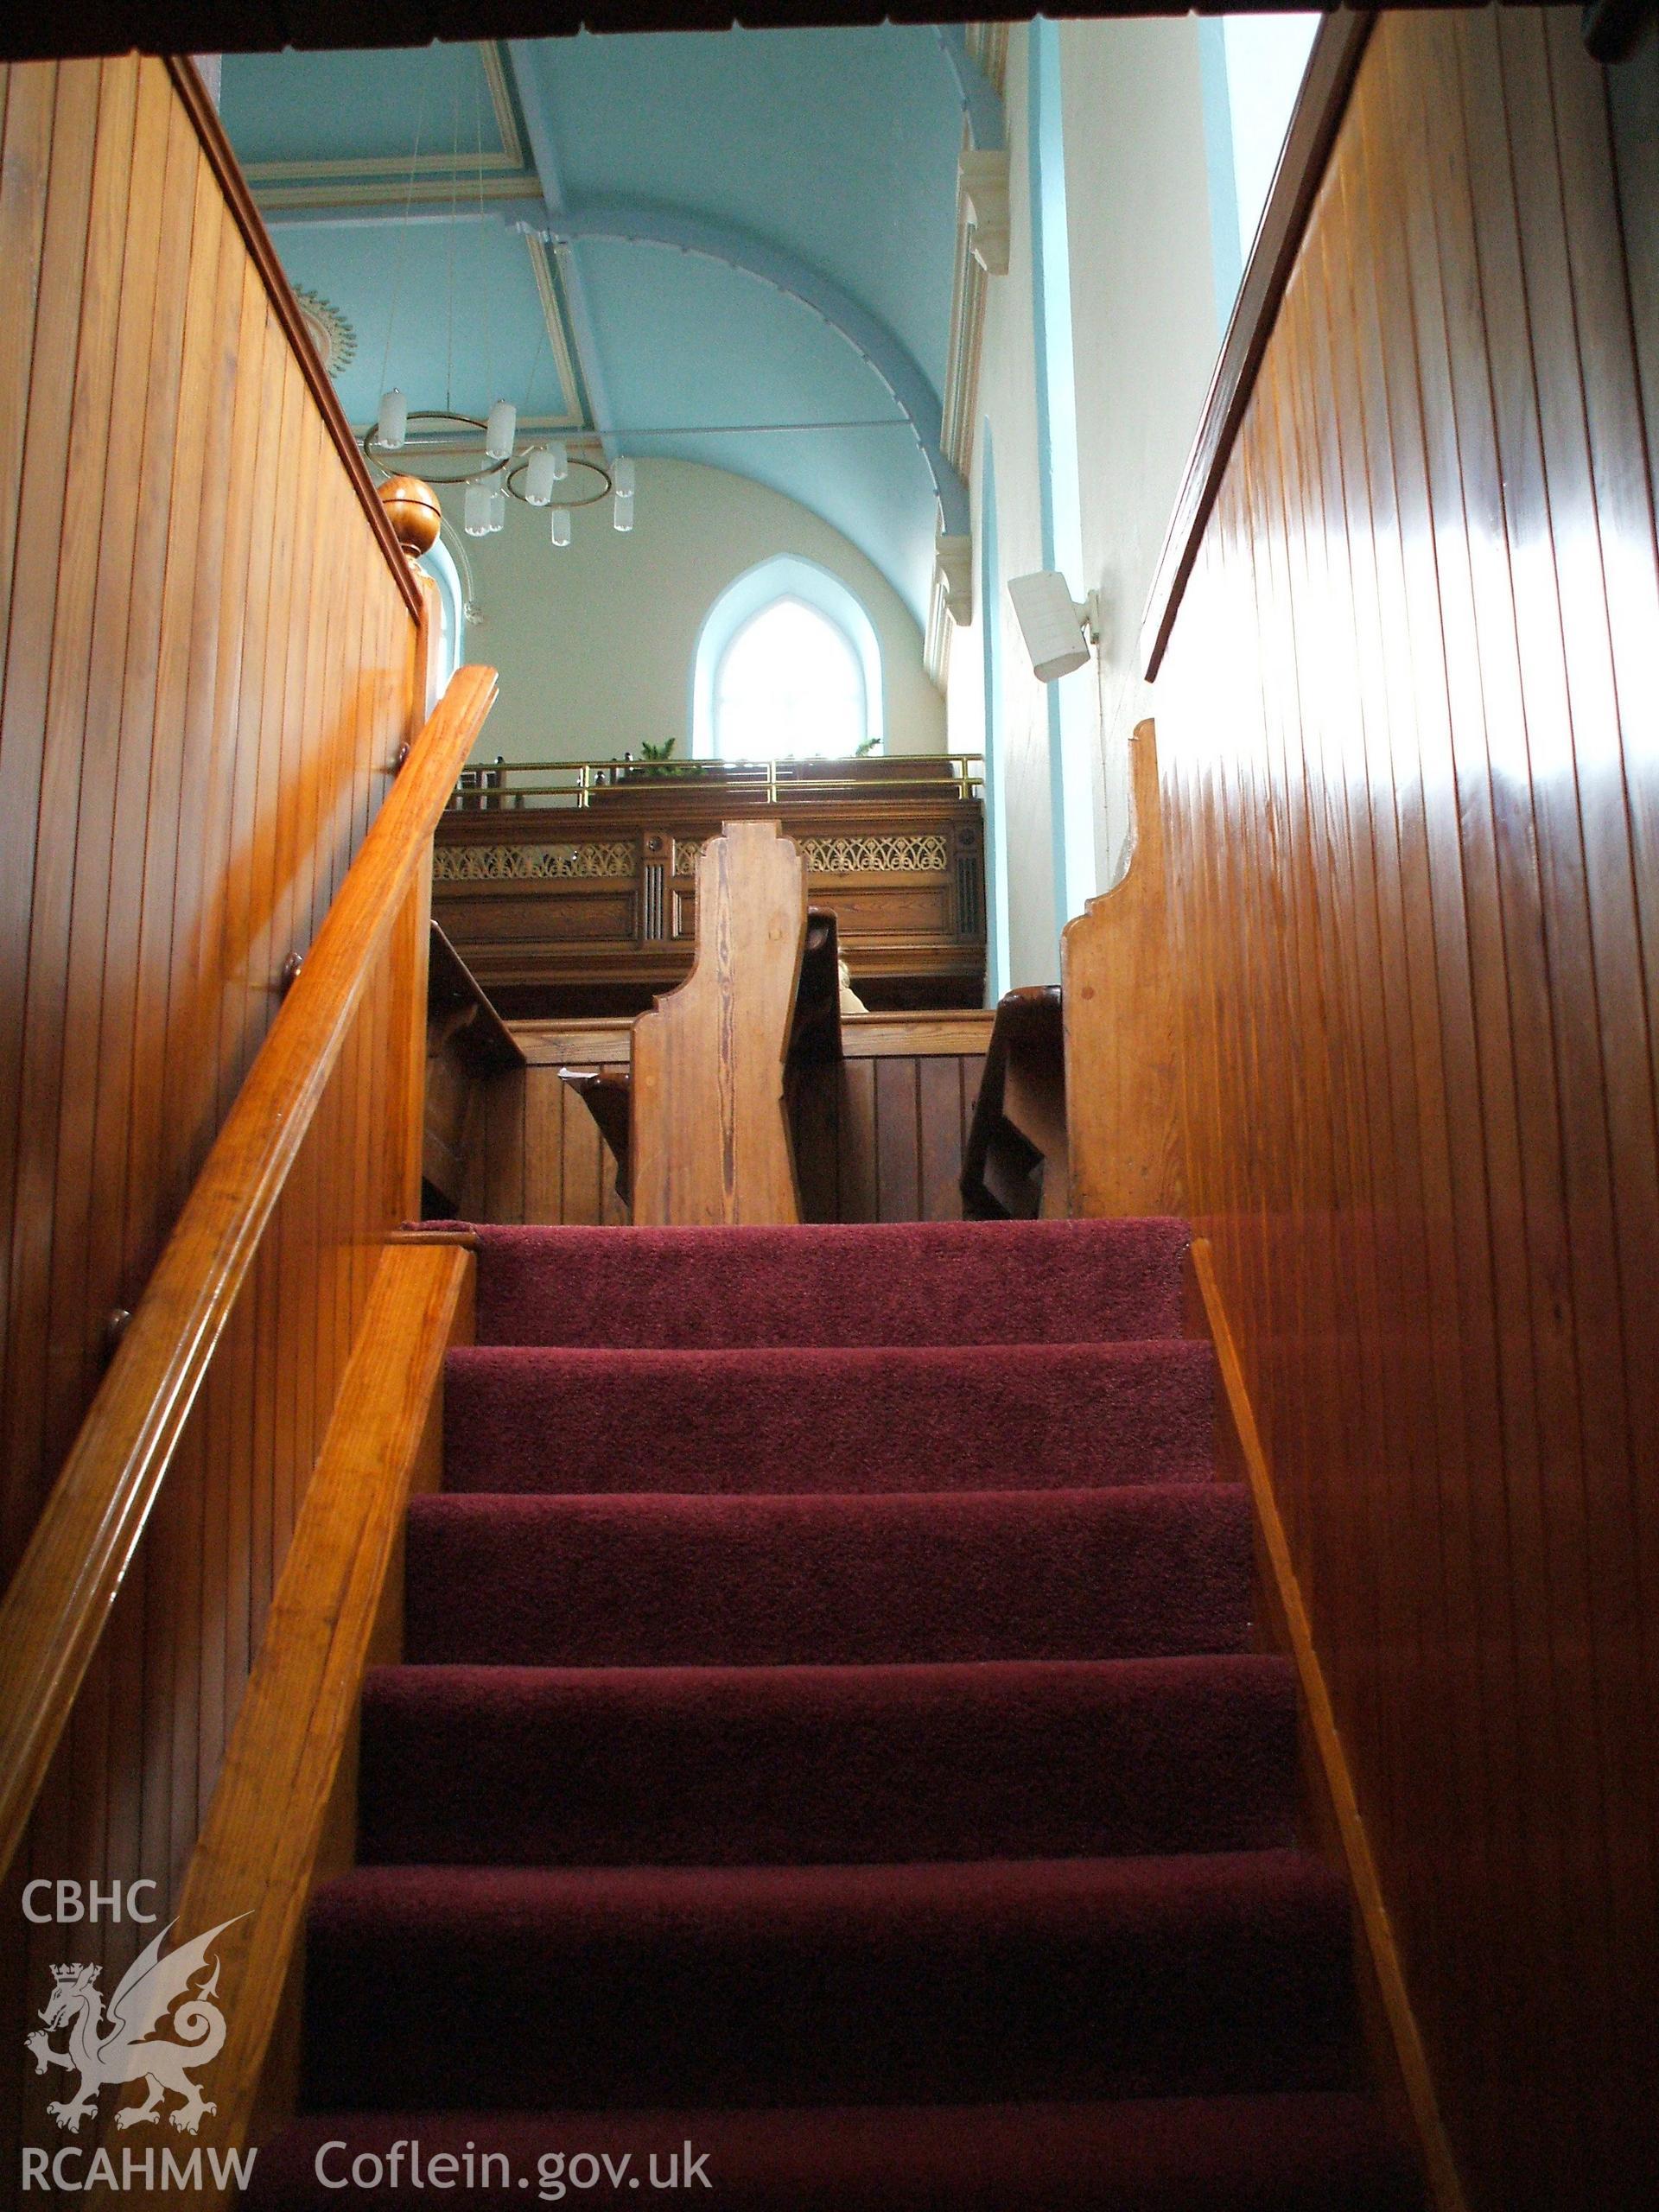 Colour digital photograph showing the interior of Soar Chapel, Llanbadarn Fawr.